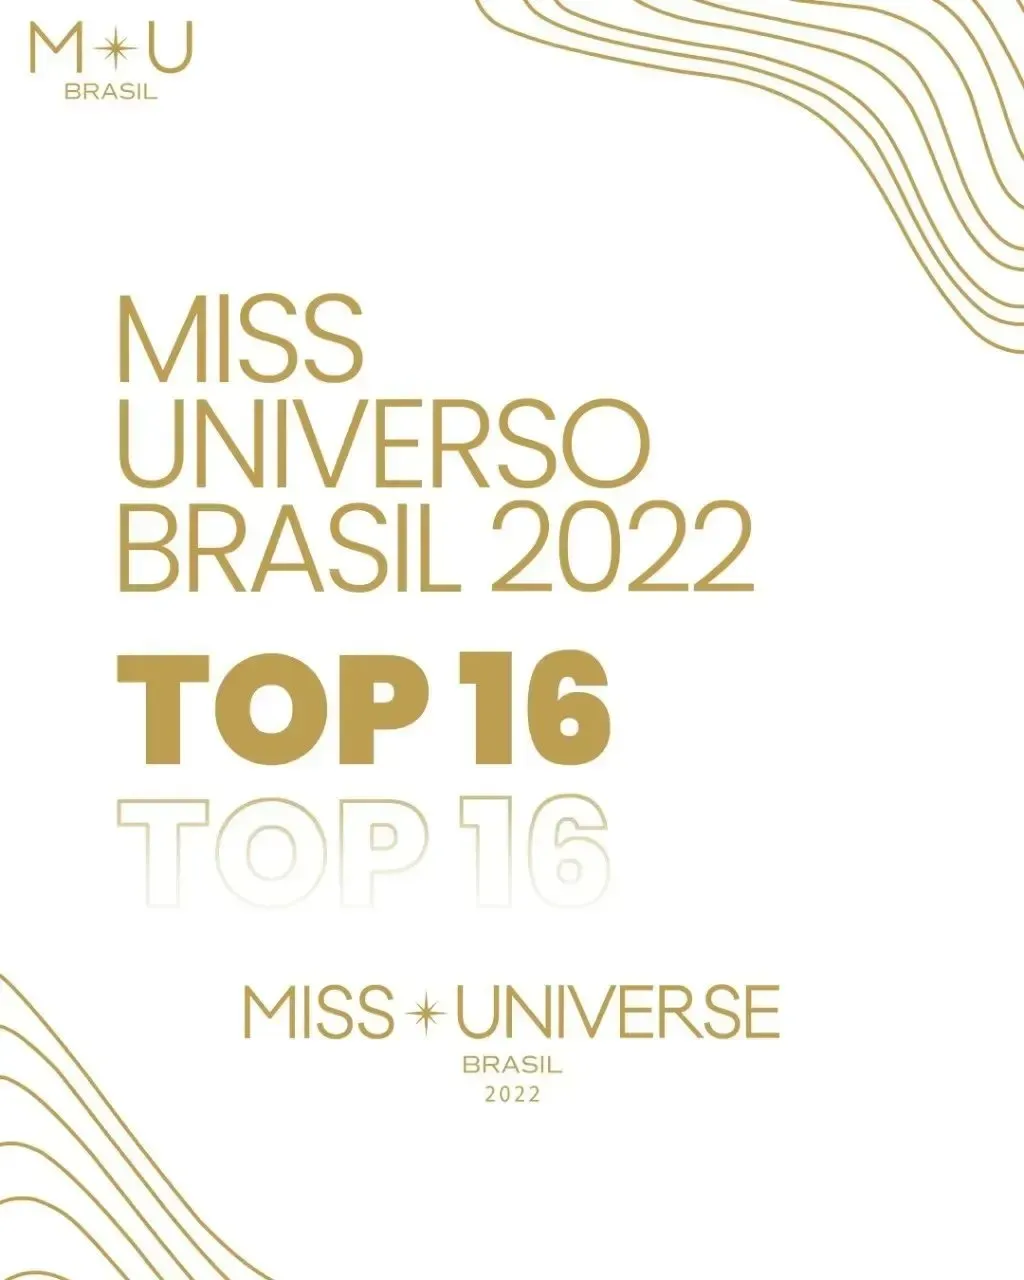 candidatas a miss brasil 2022. top 16: pags 6, 7. top 10: pag 7. - Página 6 Jda5ZX